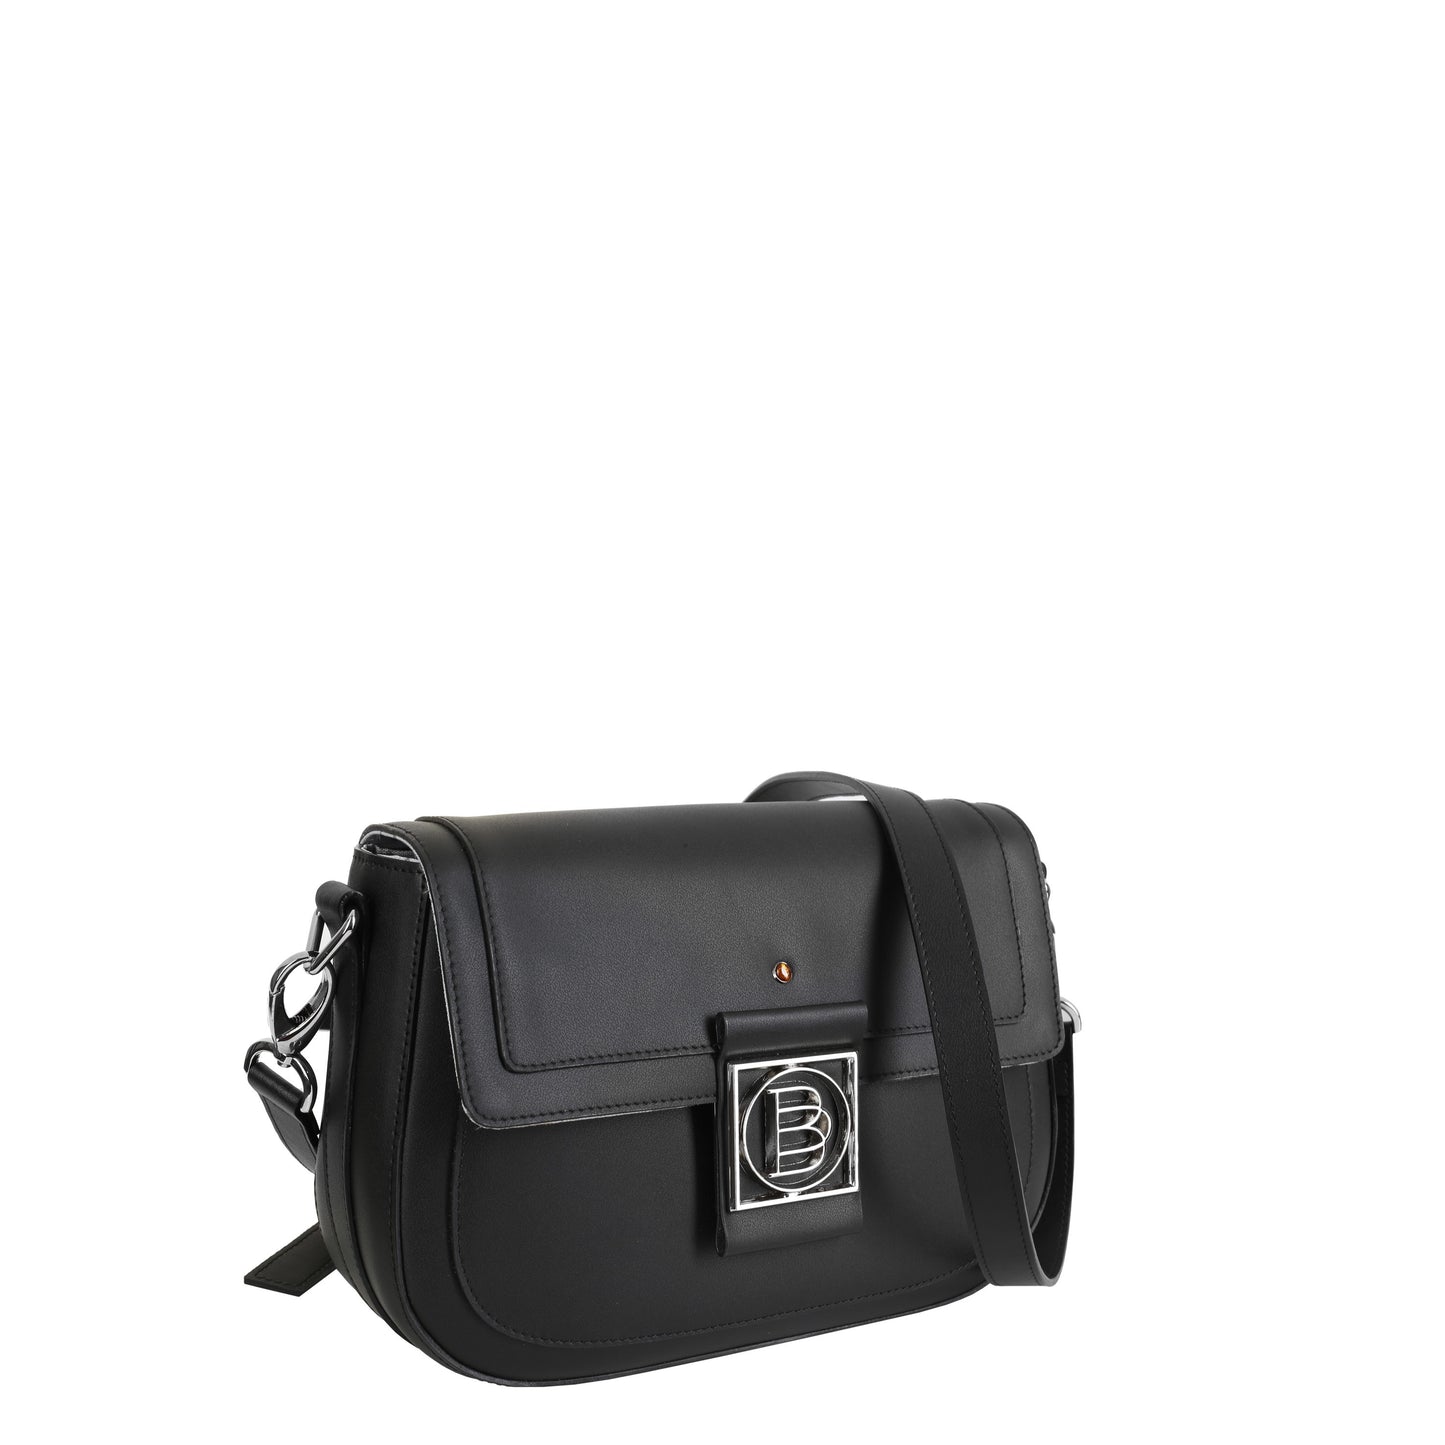 CORDA BLACK women's leather handbag